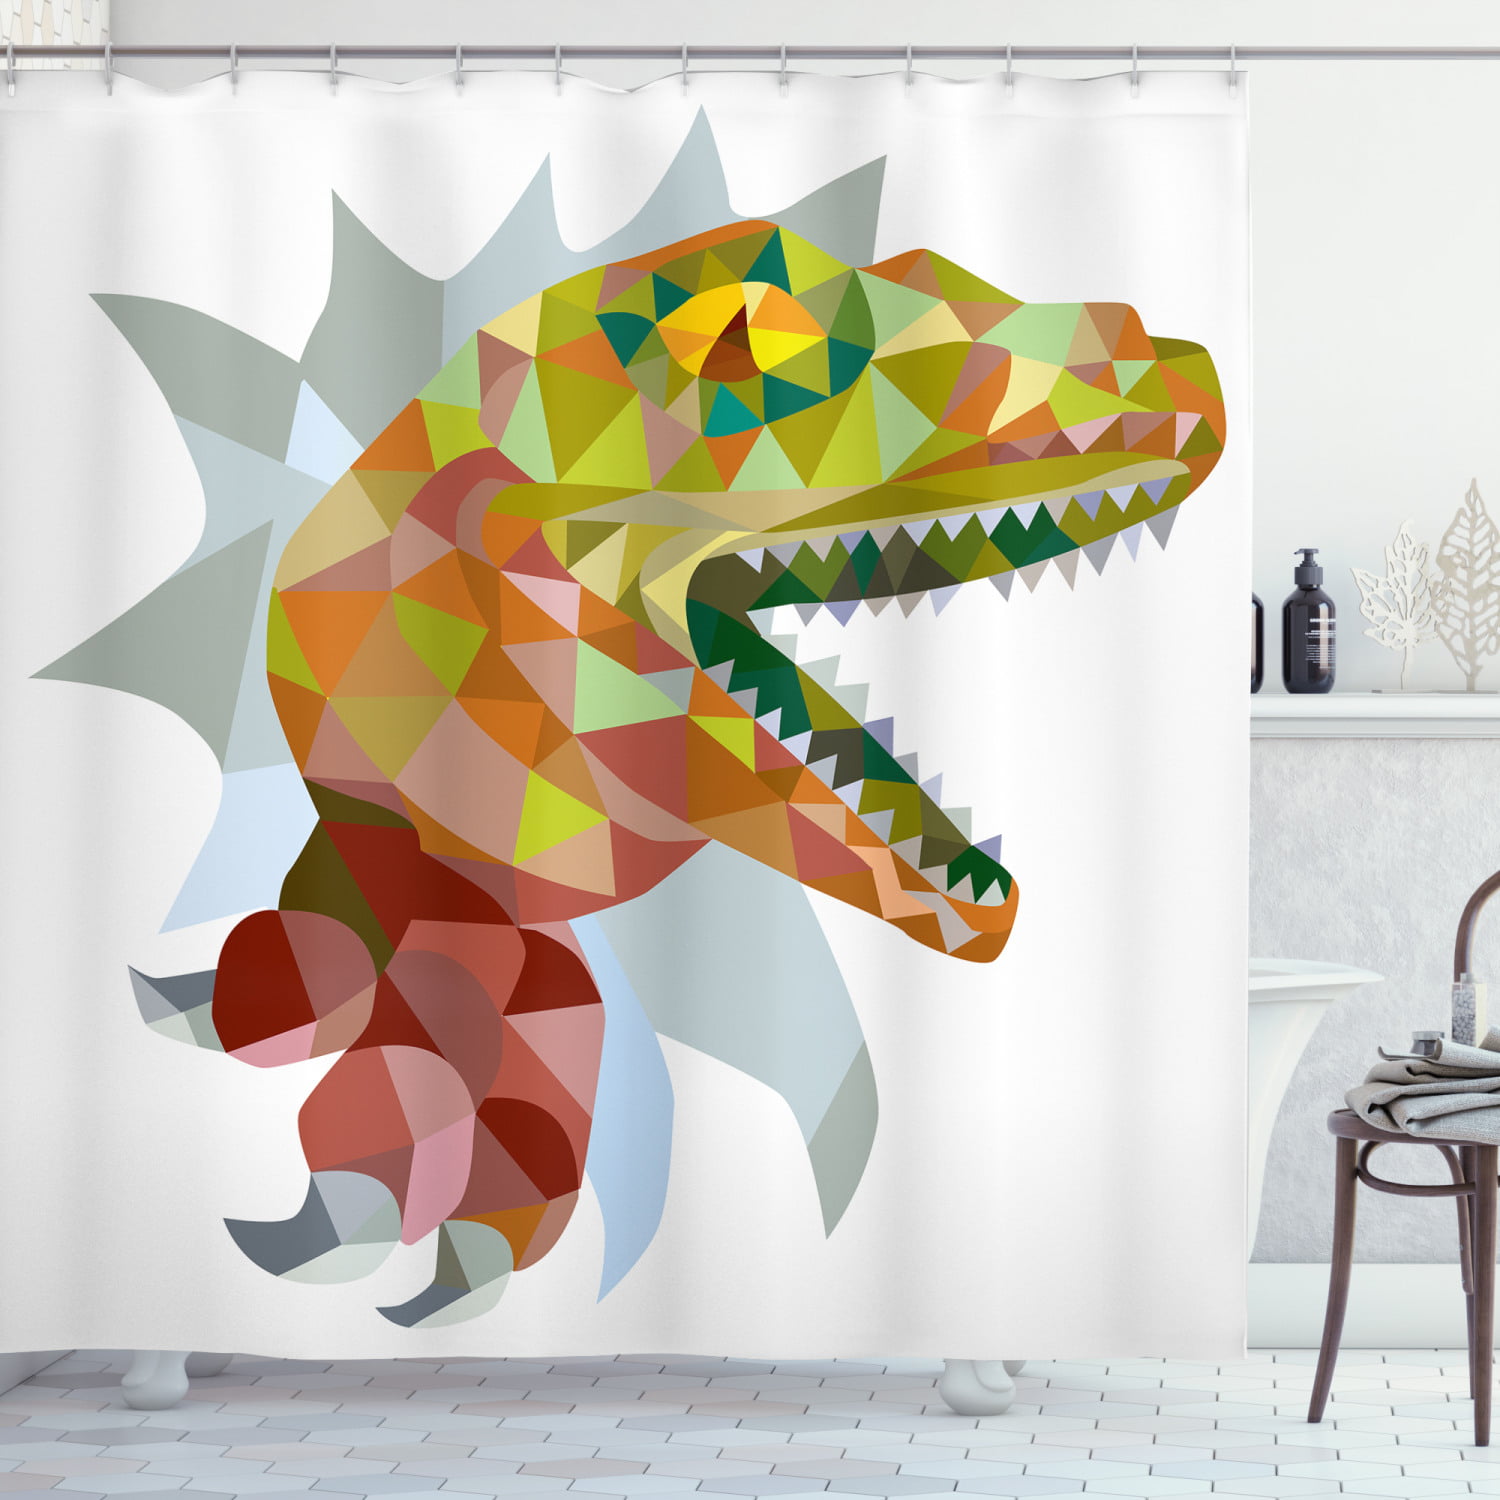 Dinosaur Starry Lake Fabric Bathroom Shower Curtain Liner Set Waterproof w/Hooks 